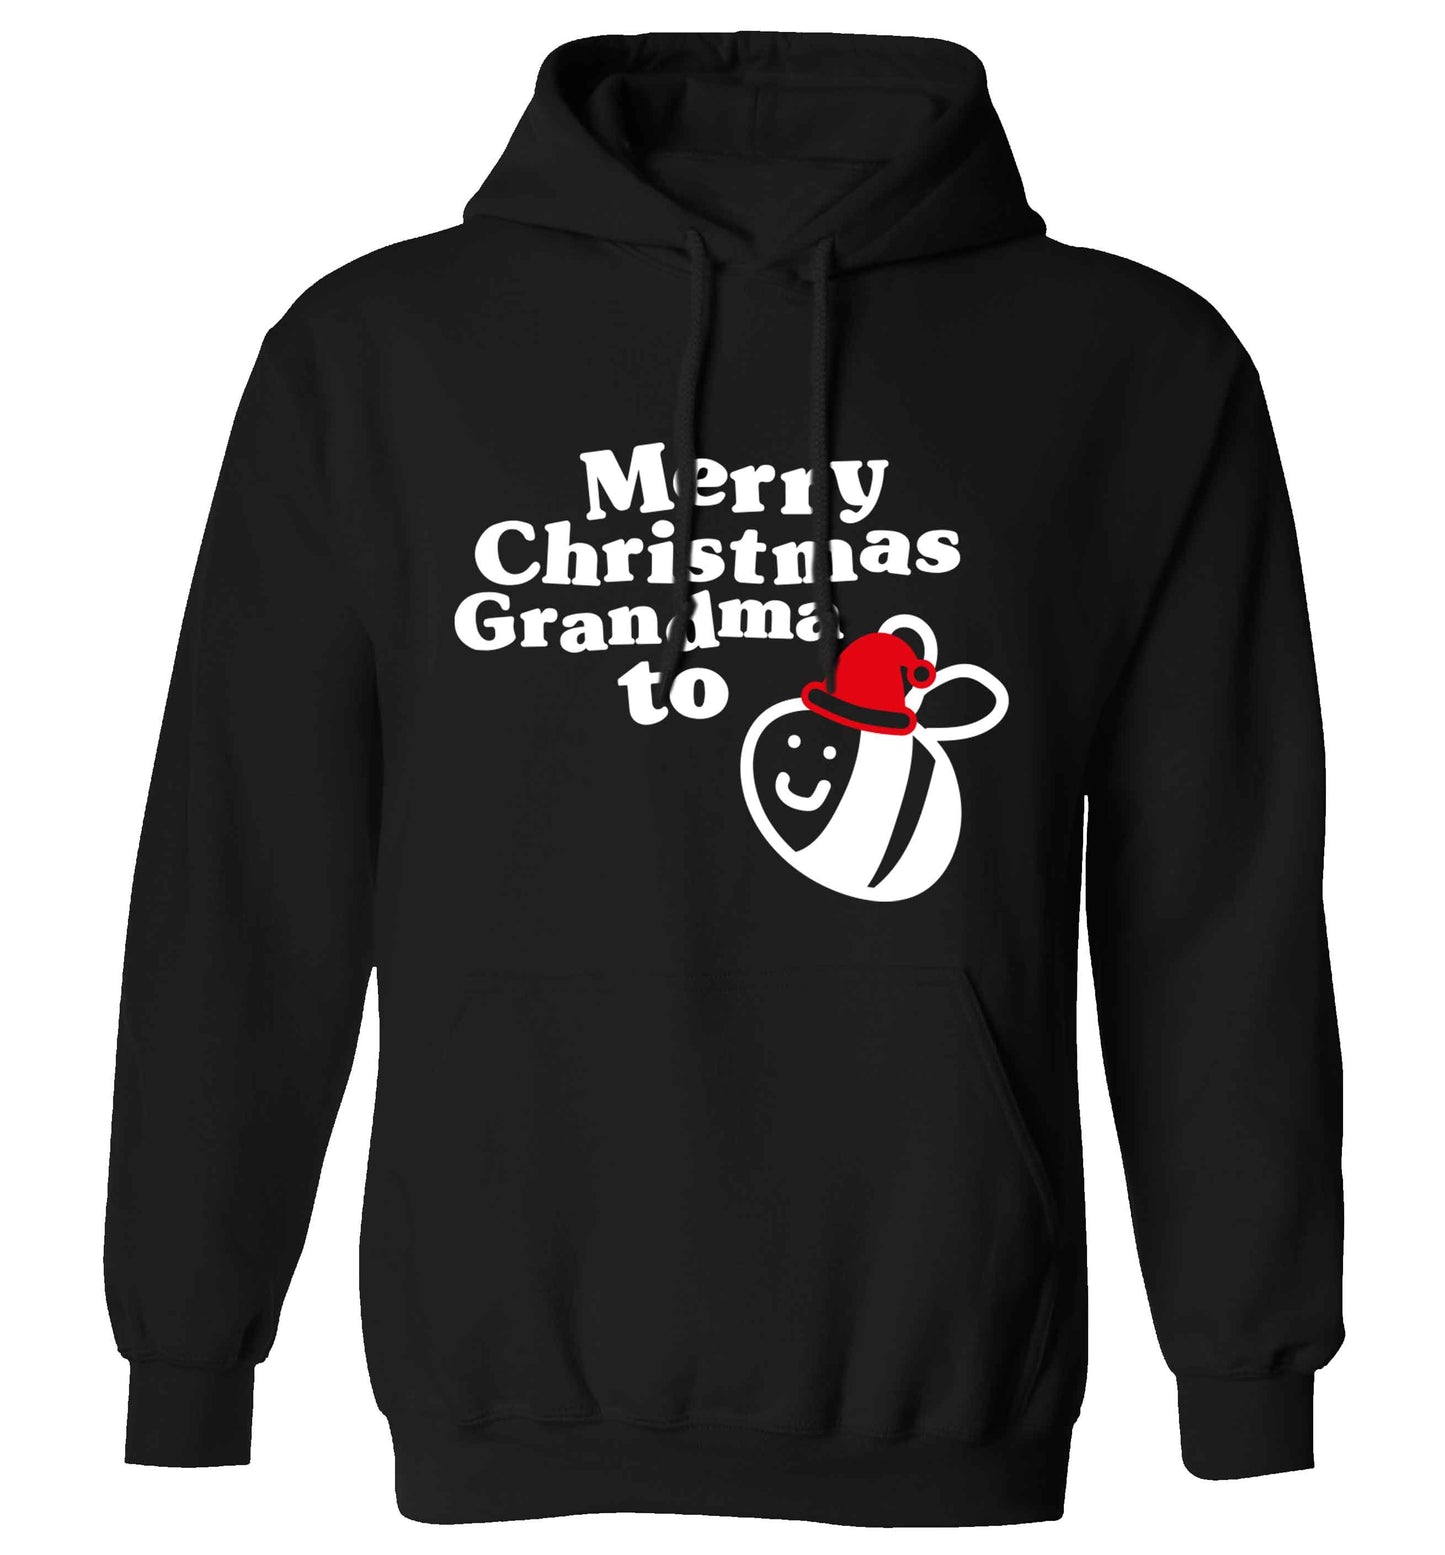 Merry Christmas grandma to be adults unisex black hoodie 2XL